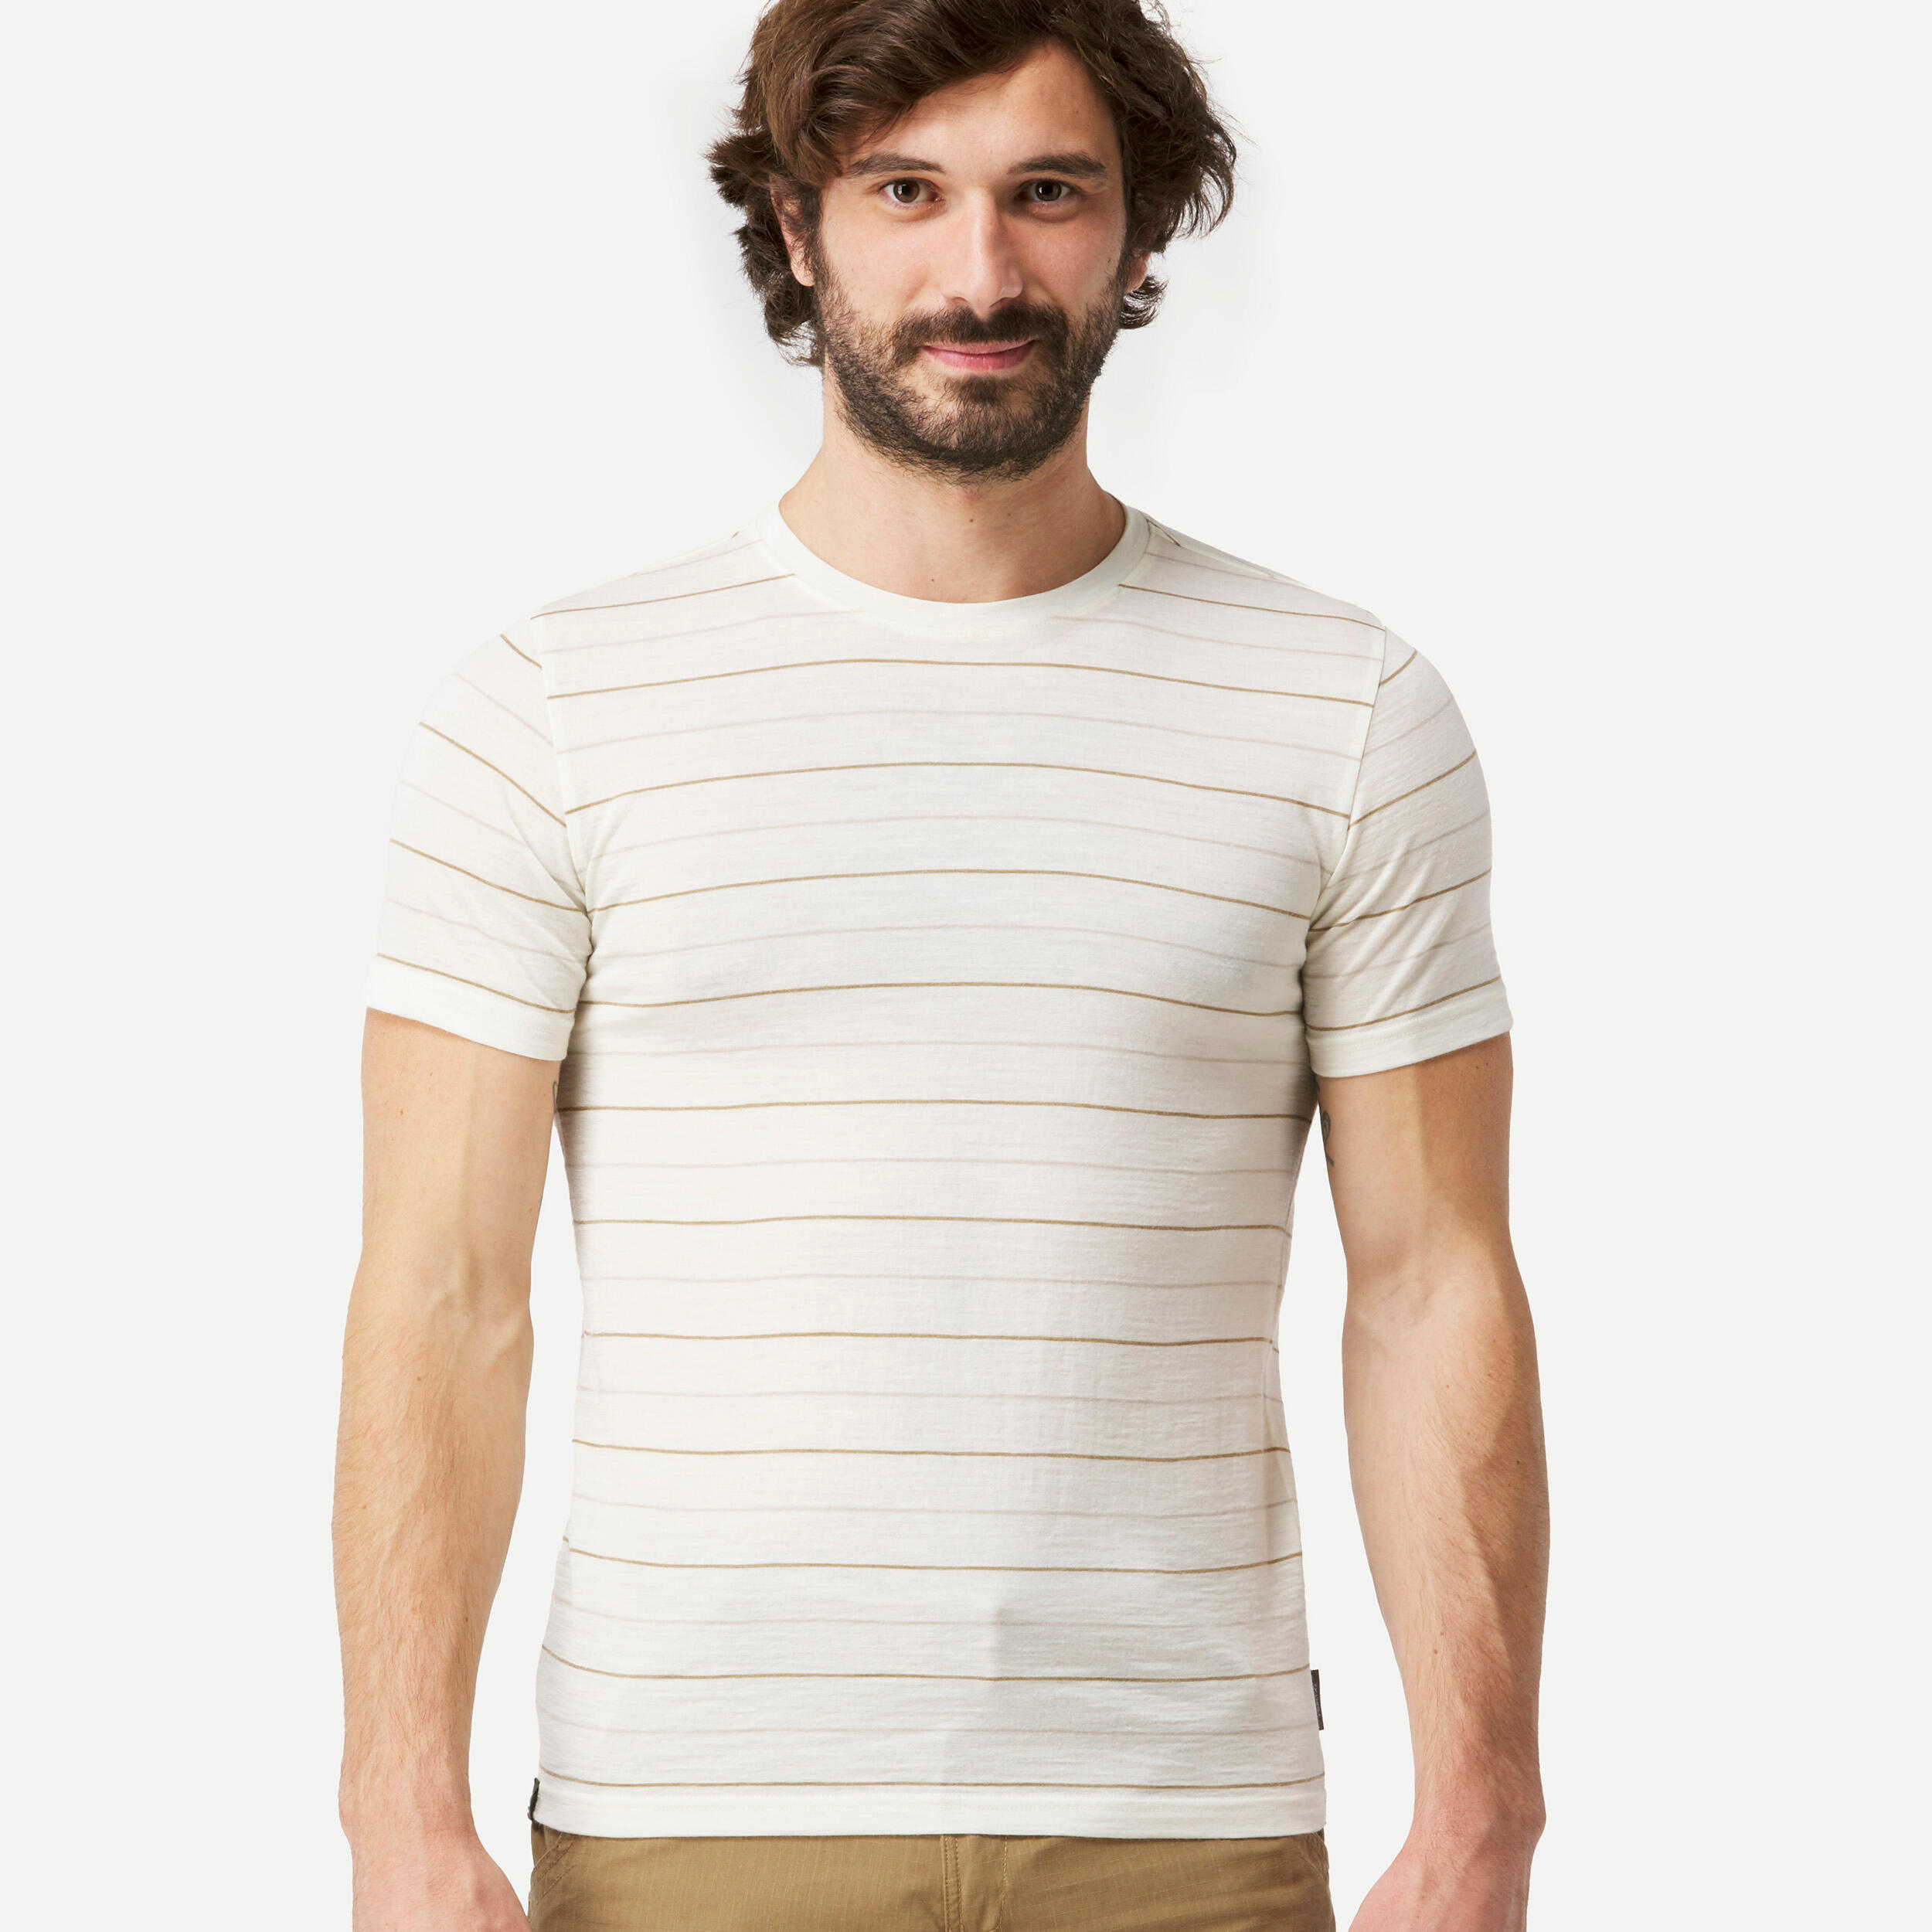 Men’s short-sleeved Merino wool hiking travel t-shirt - TRAVEL 500 white 2/6